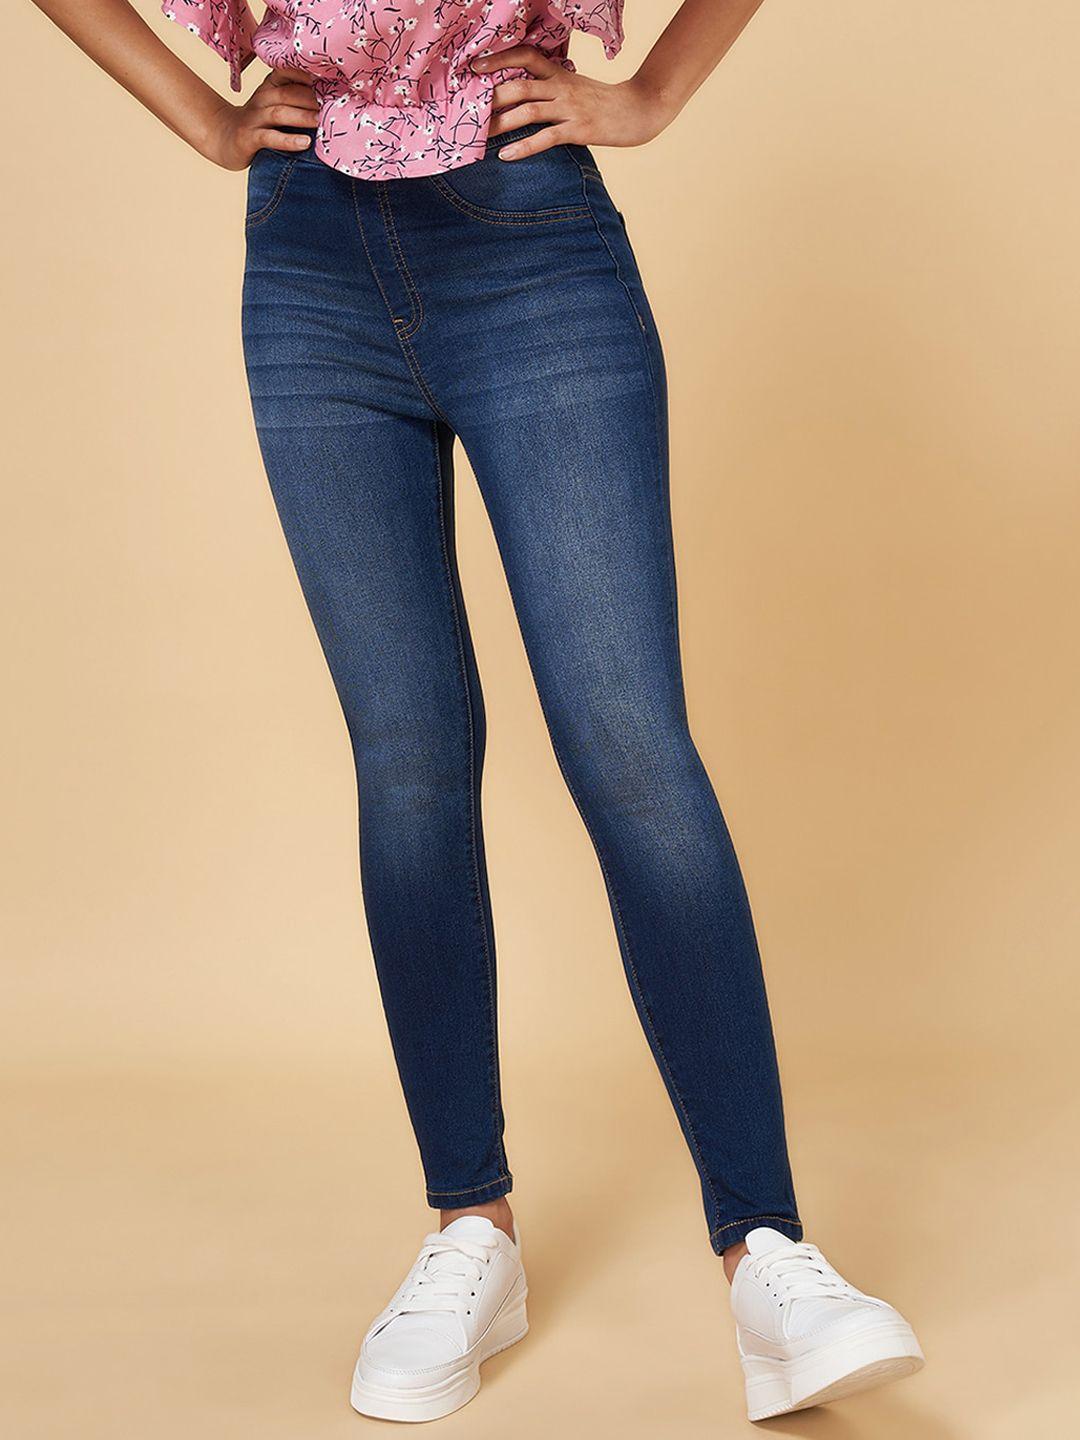 YU by Pantaloons Women Navy Blue Skinny Fit Light Fade Jeans